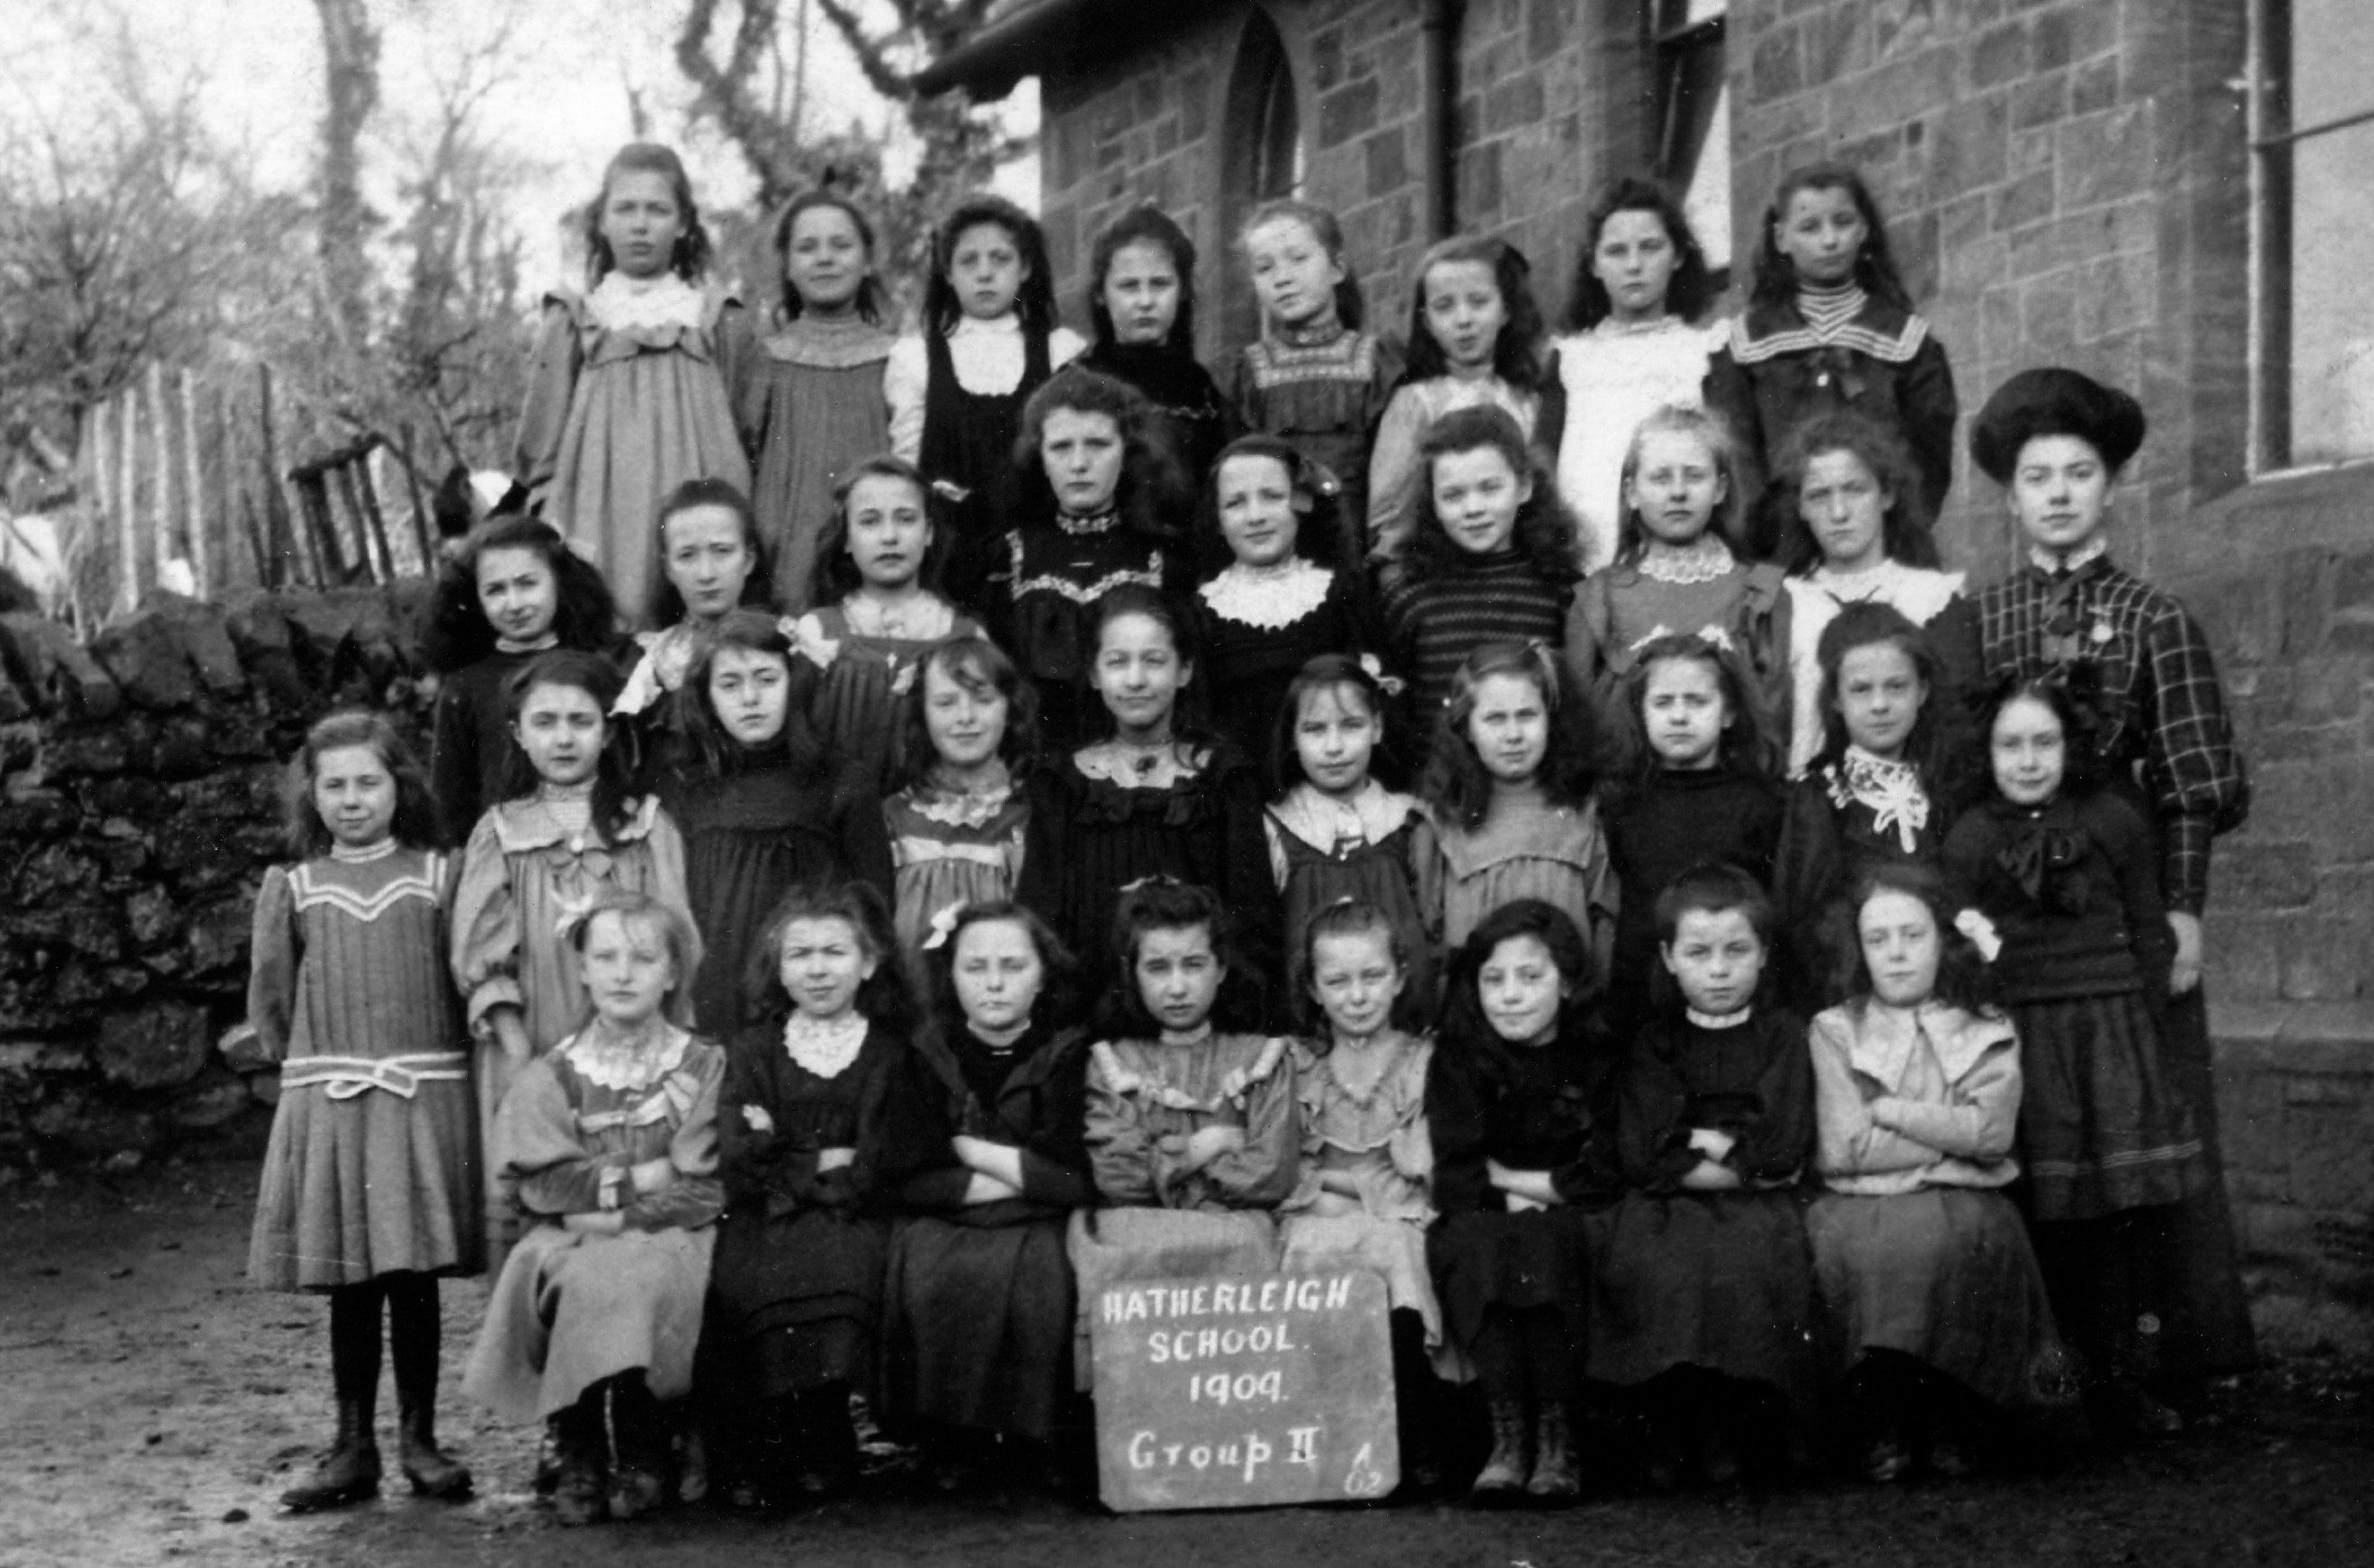 School 1909 Group 2